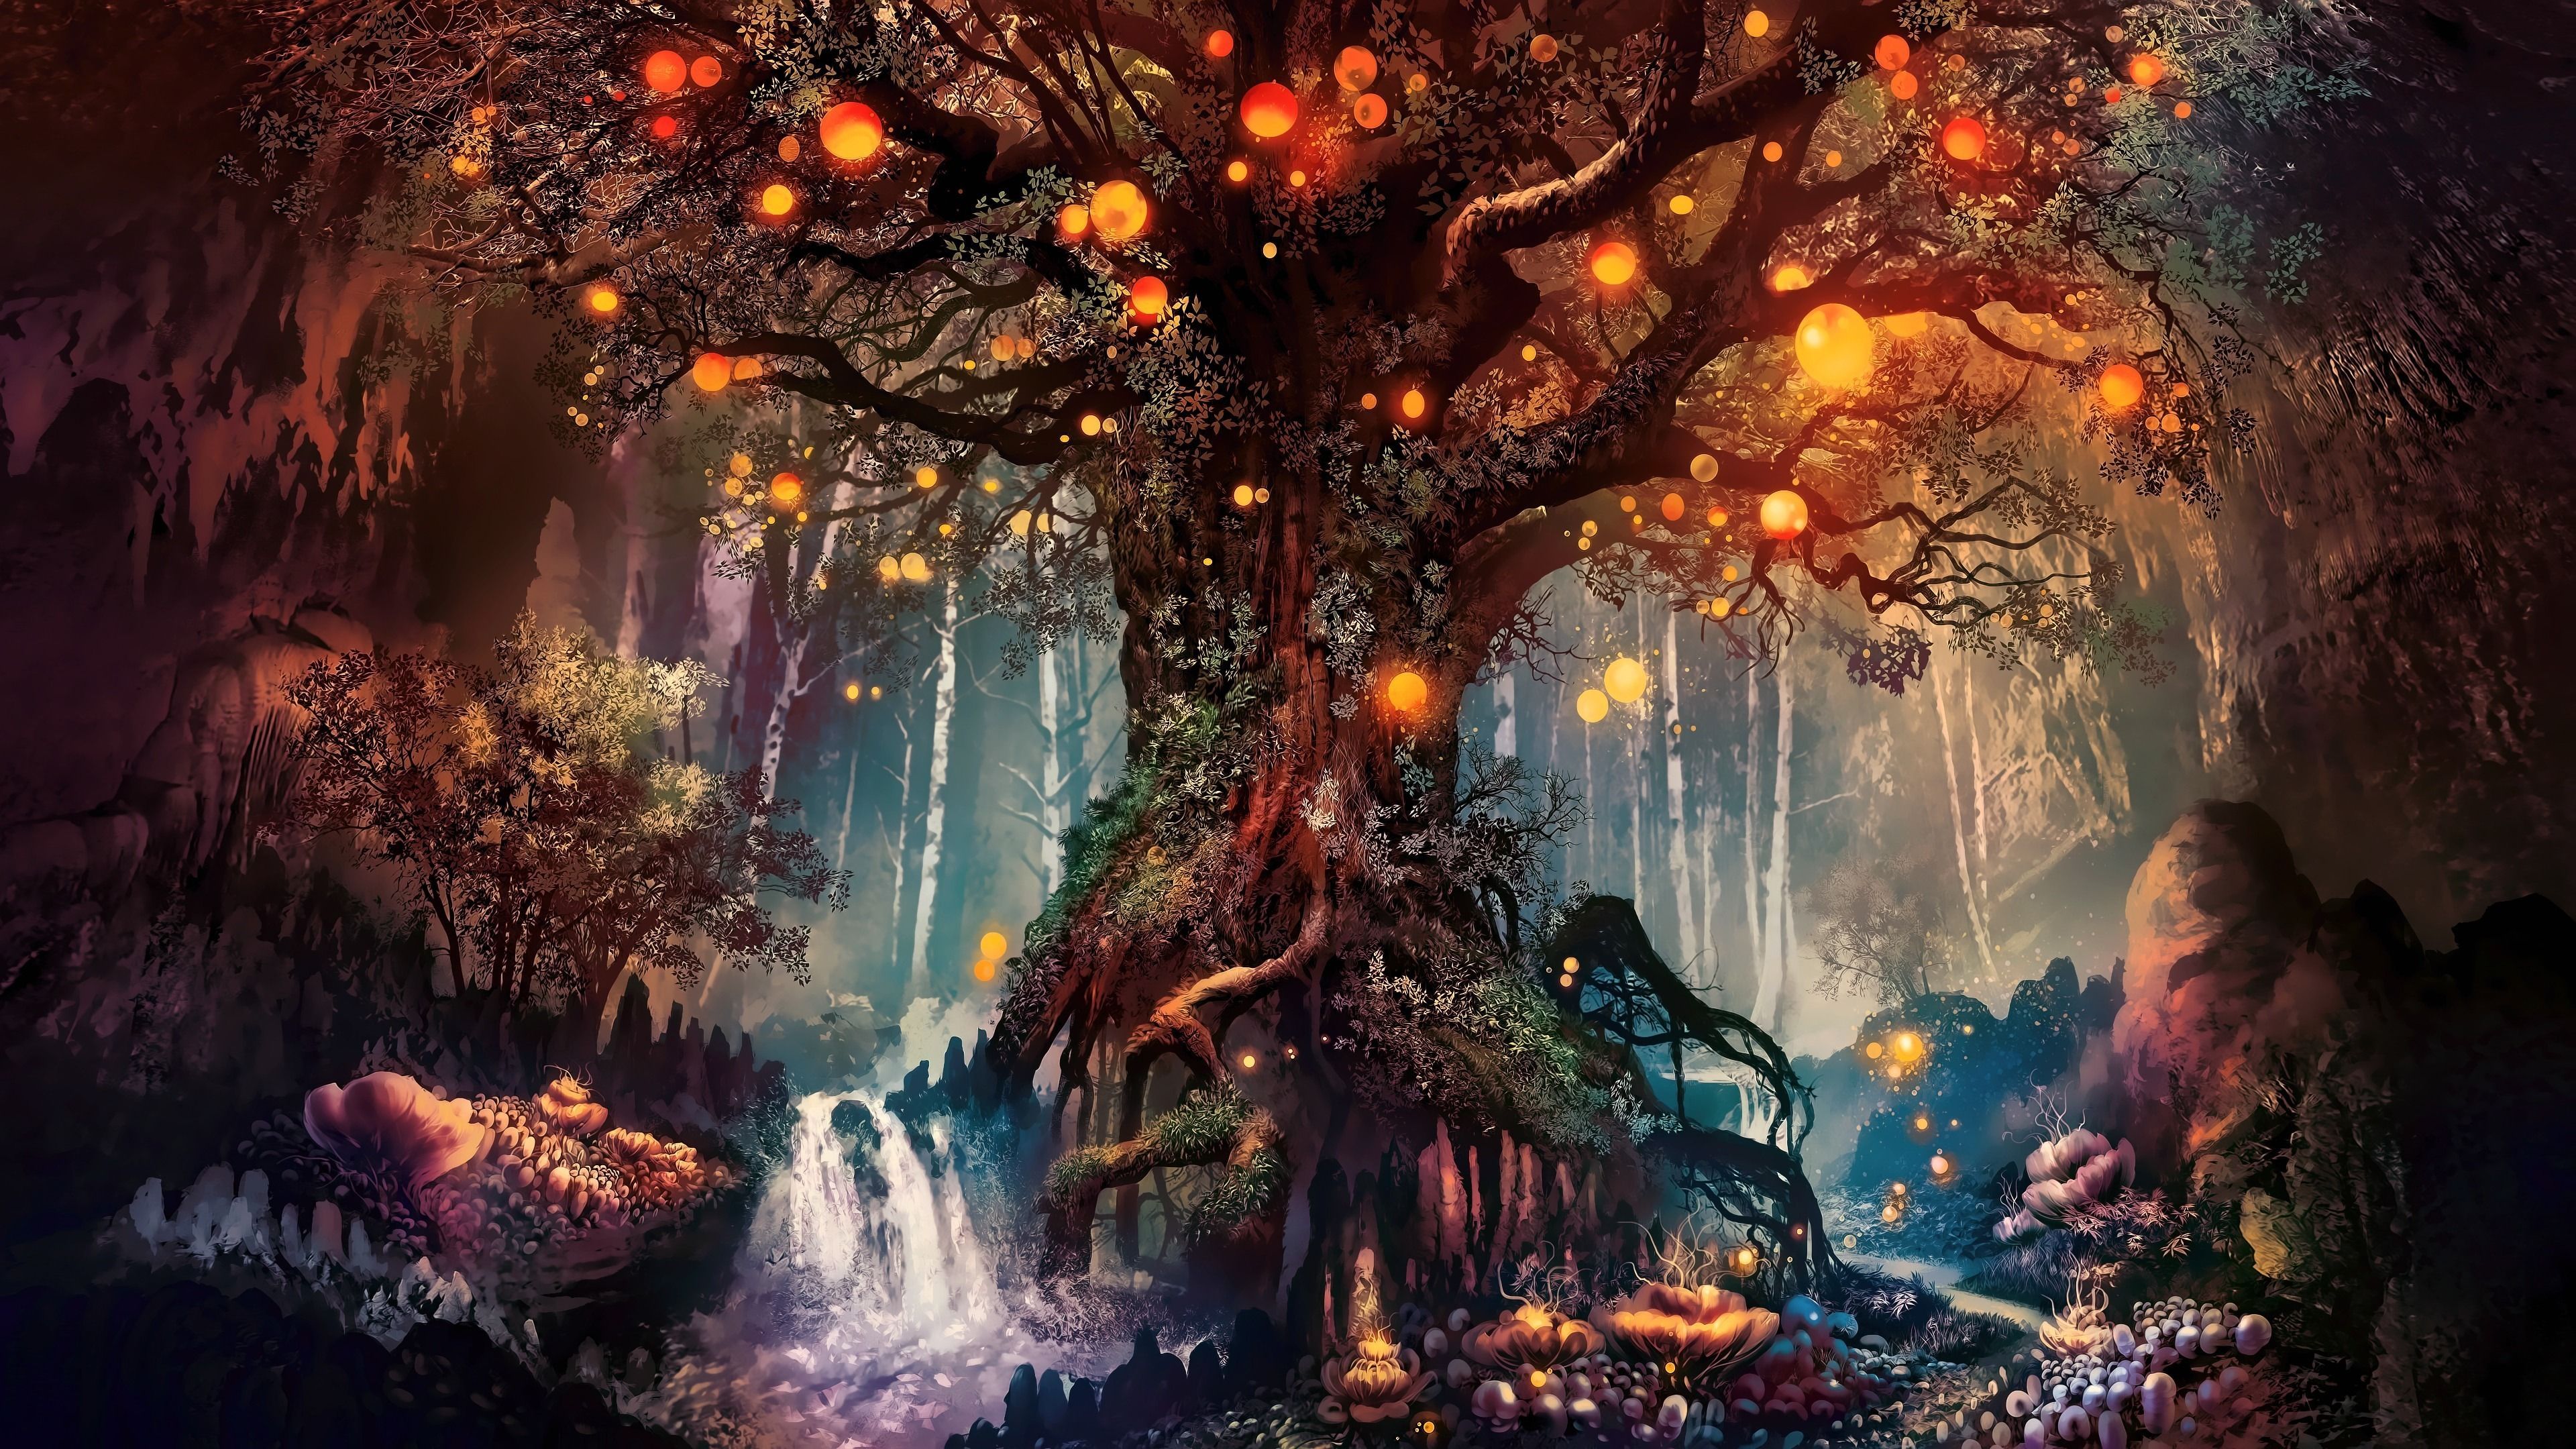 Download 3840x2160 wallpaper old tree, fantasy, art, 4k, uhd 16: widescreen, 3840x2160 HD image, background,. Fantasy tree, Fantasy artwork, 1920x1200 wallpaper